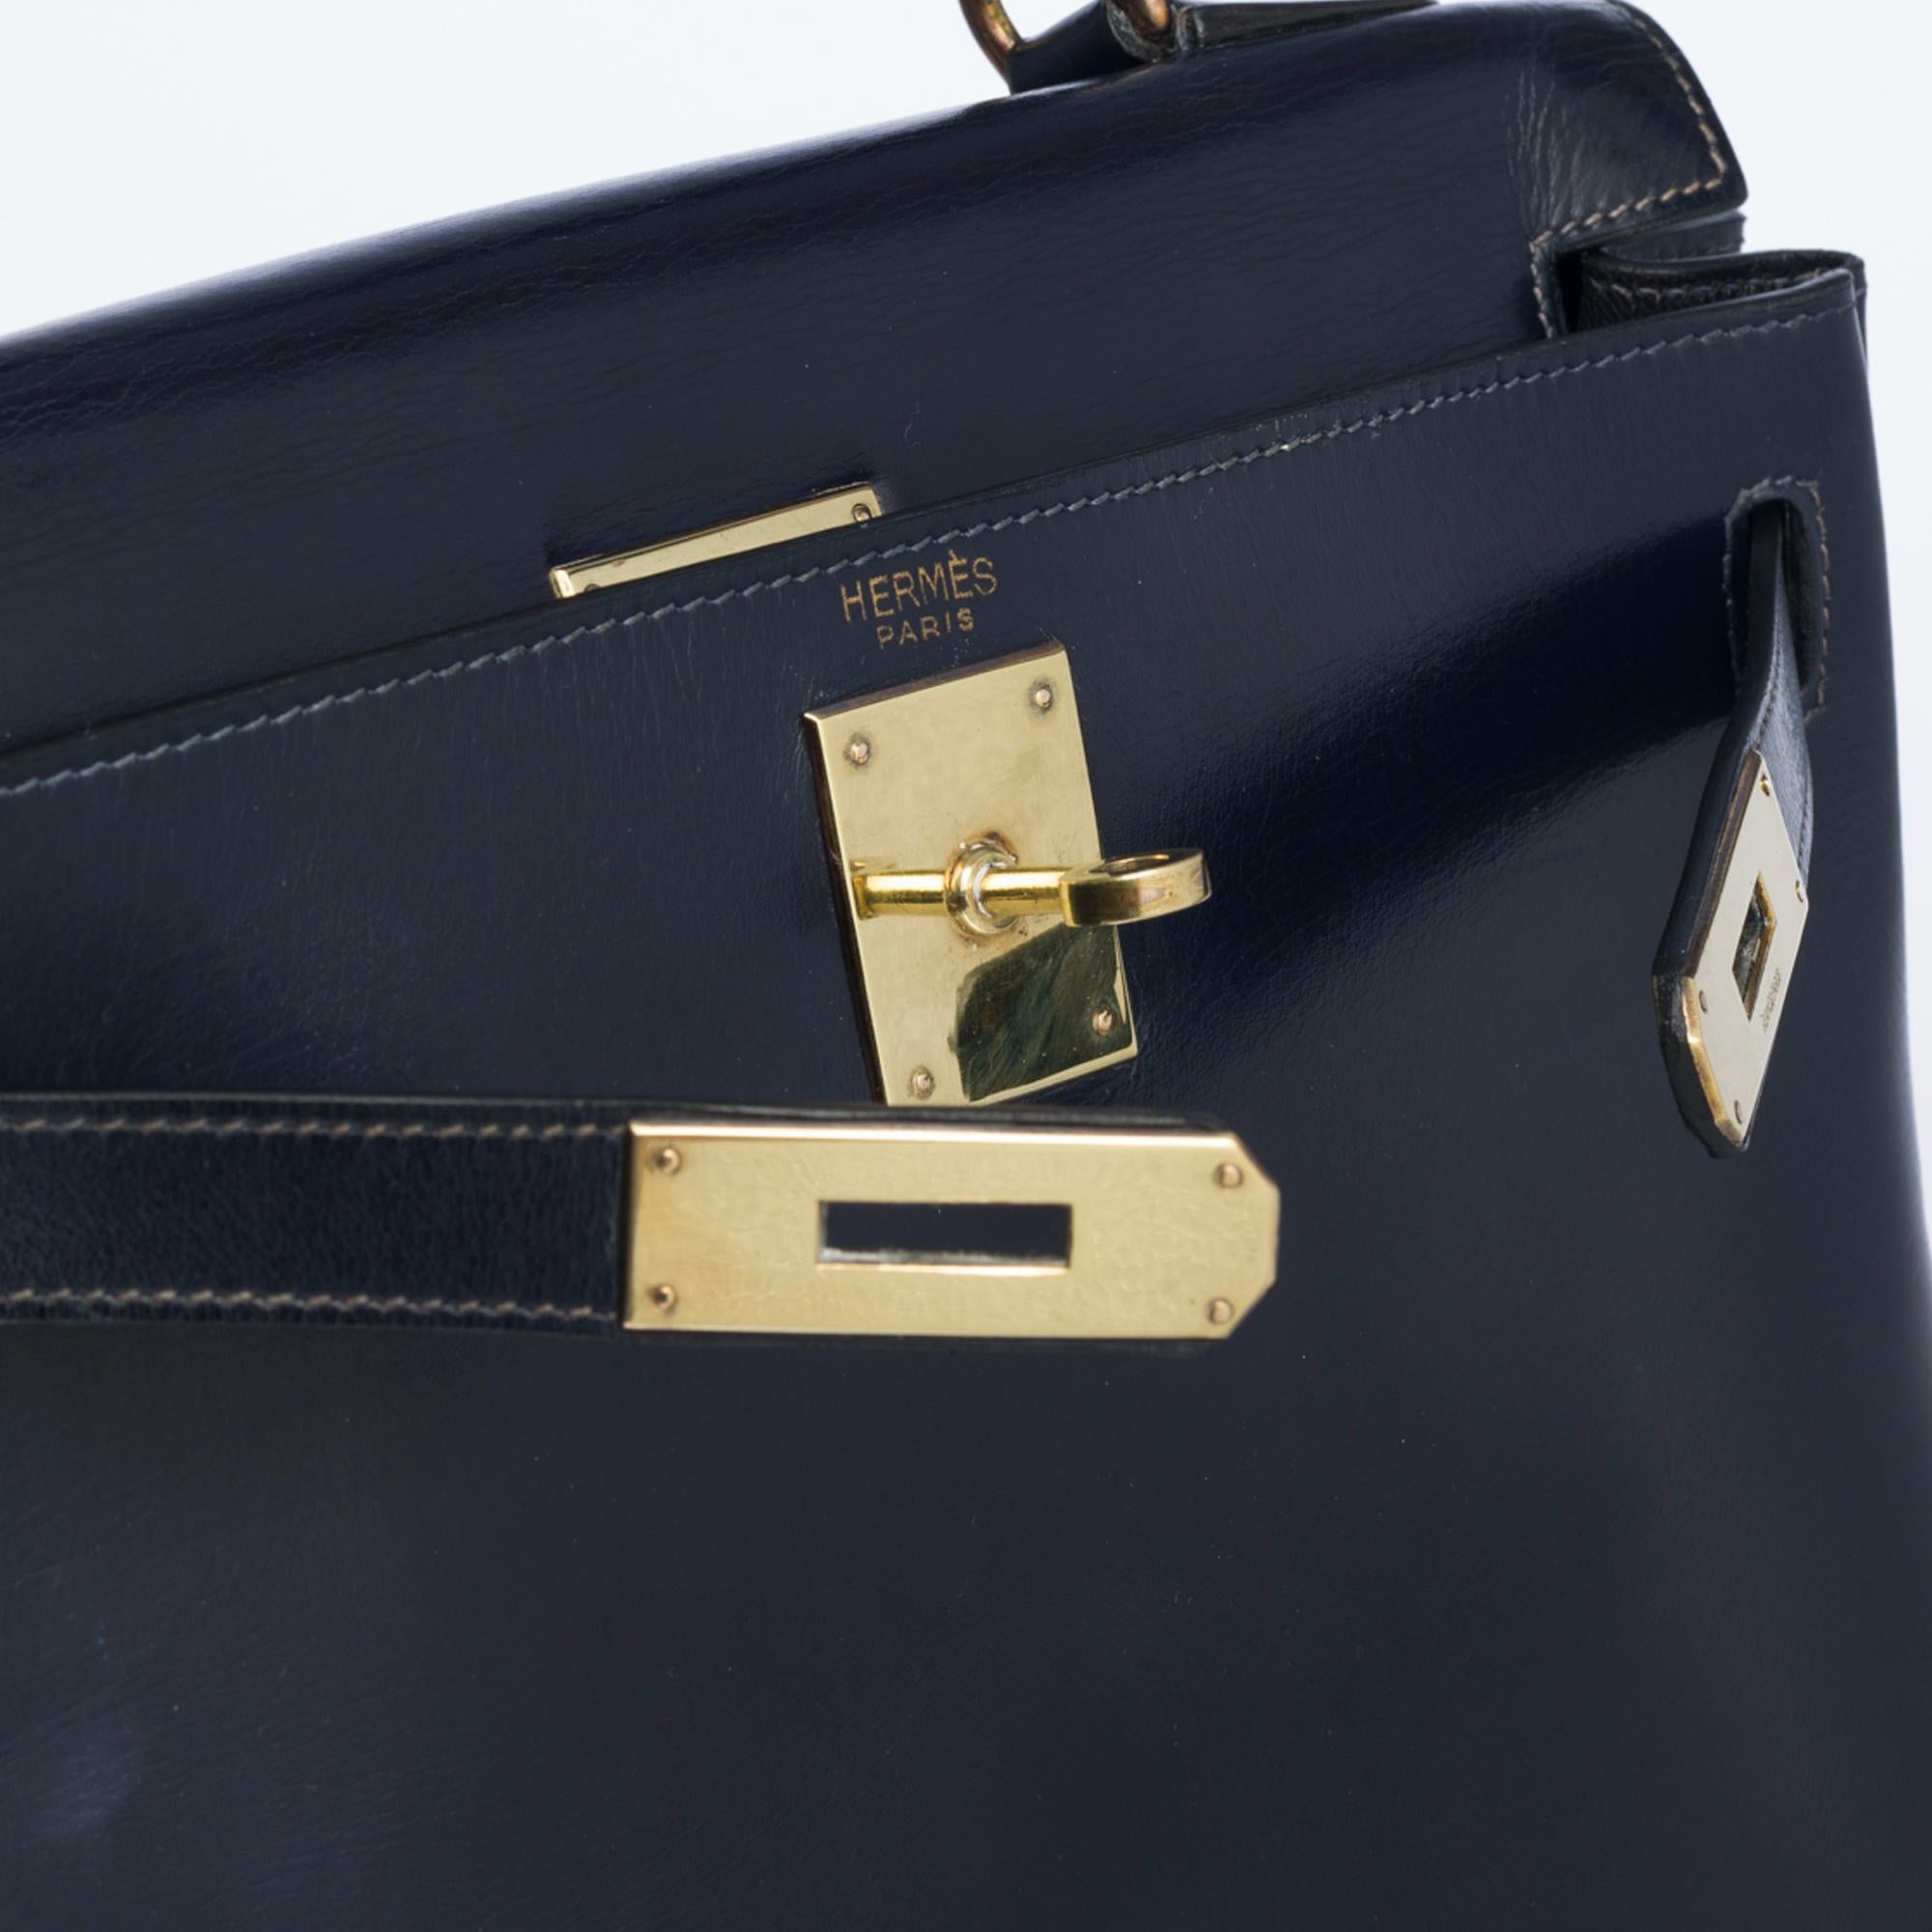 Black Amazing Hermes Kelly 28 retourne handbag strap in Navy blue box calfskin, GHW